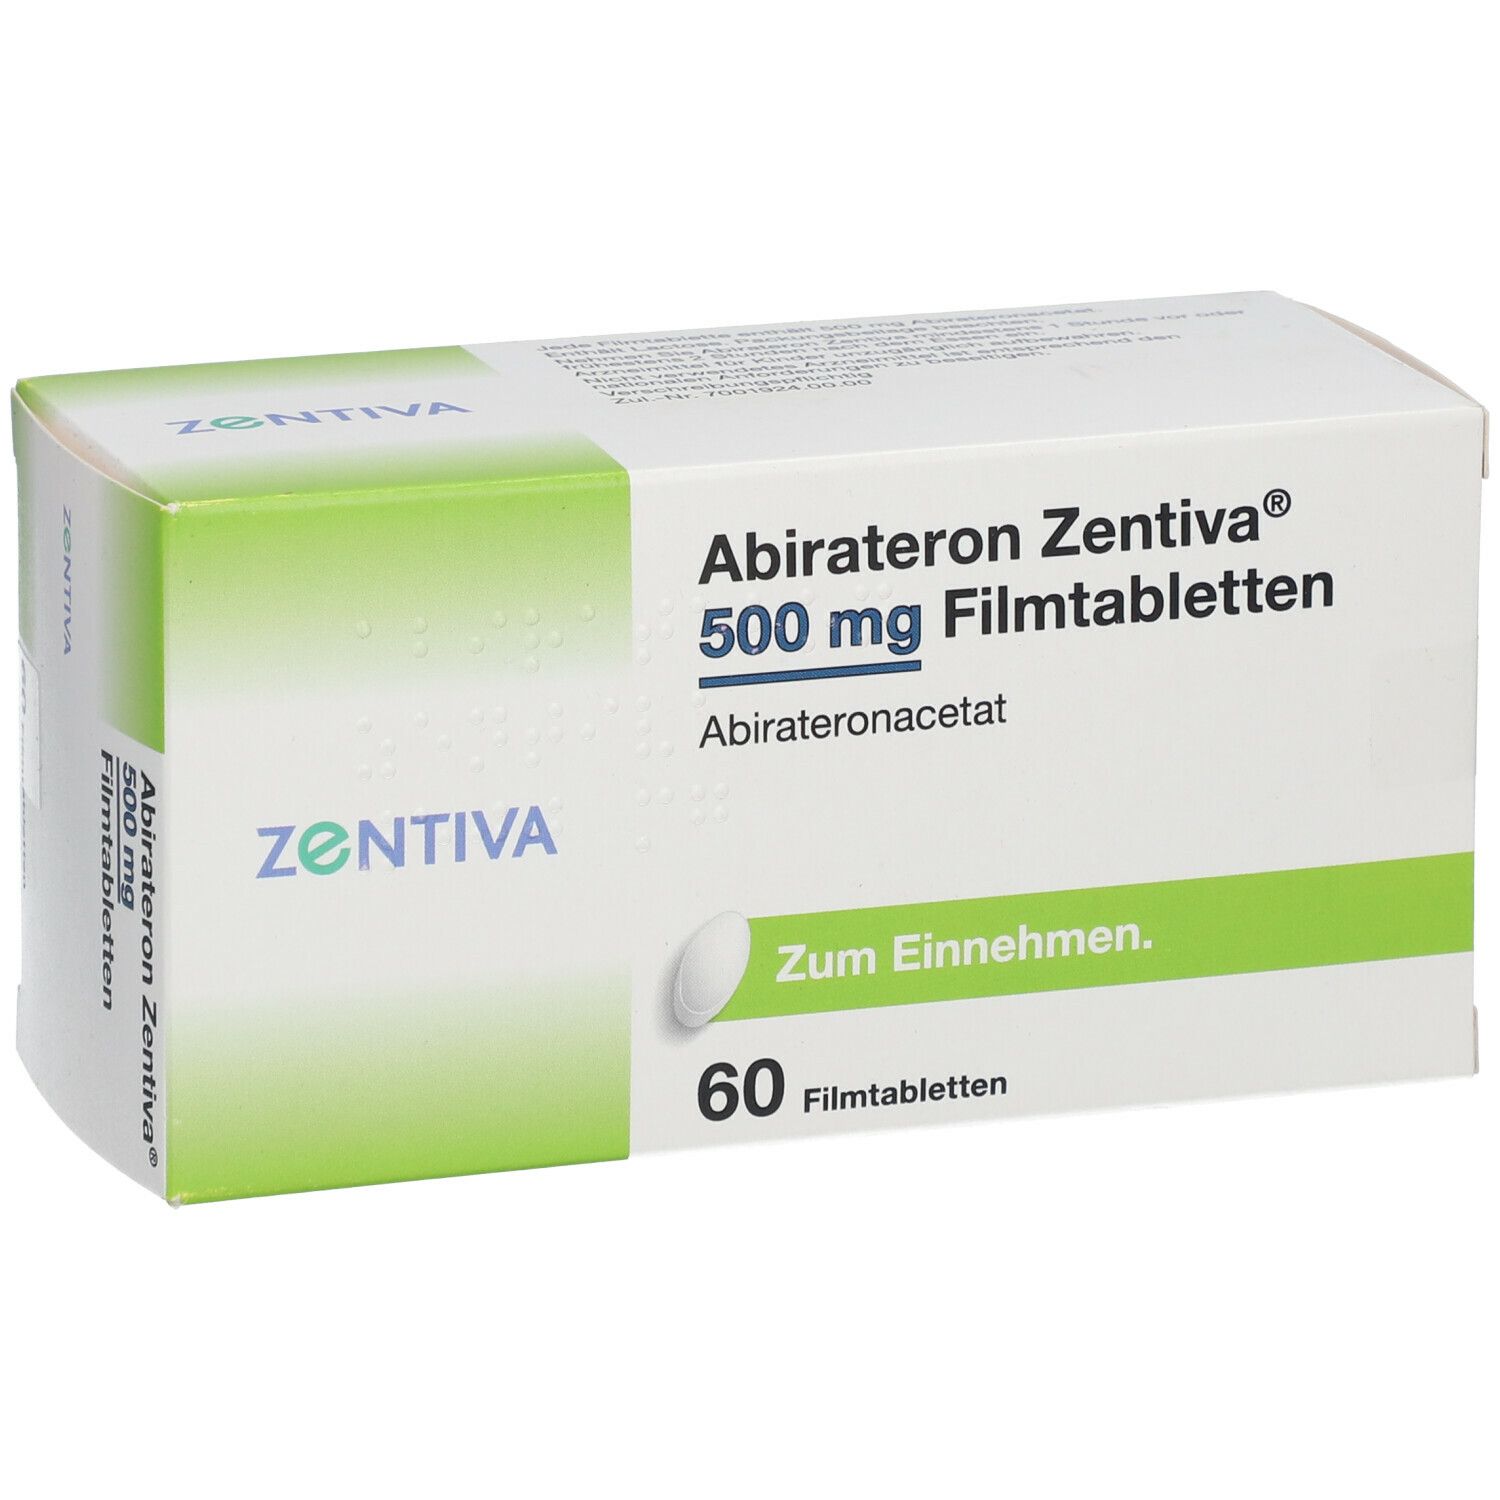 Abirateron Zentiva 500 mg Filmtabletten 60 St mit dem E-Rezept kaufen -  SHOP APOTHEKE